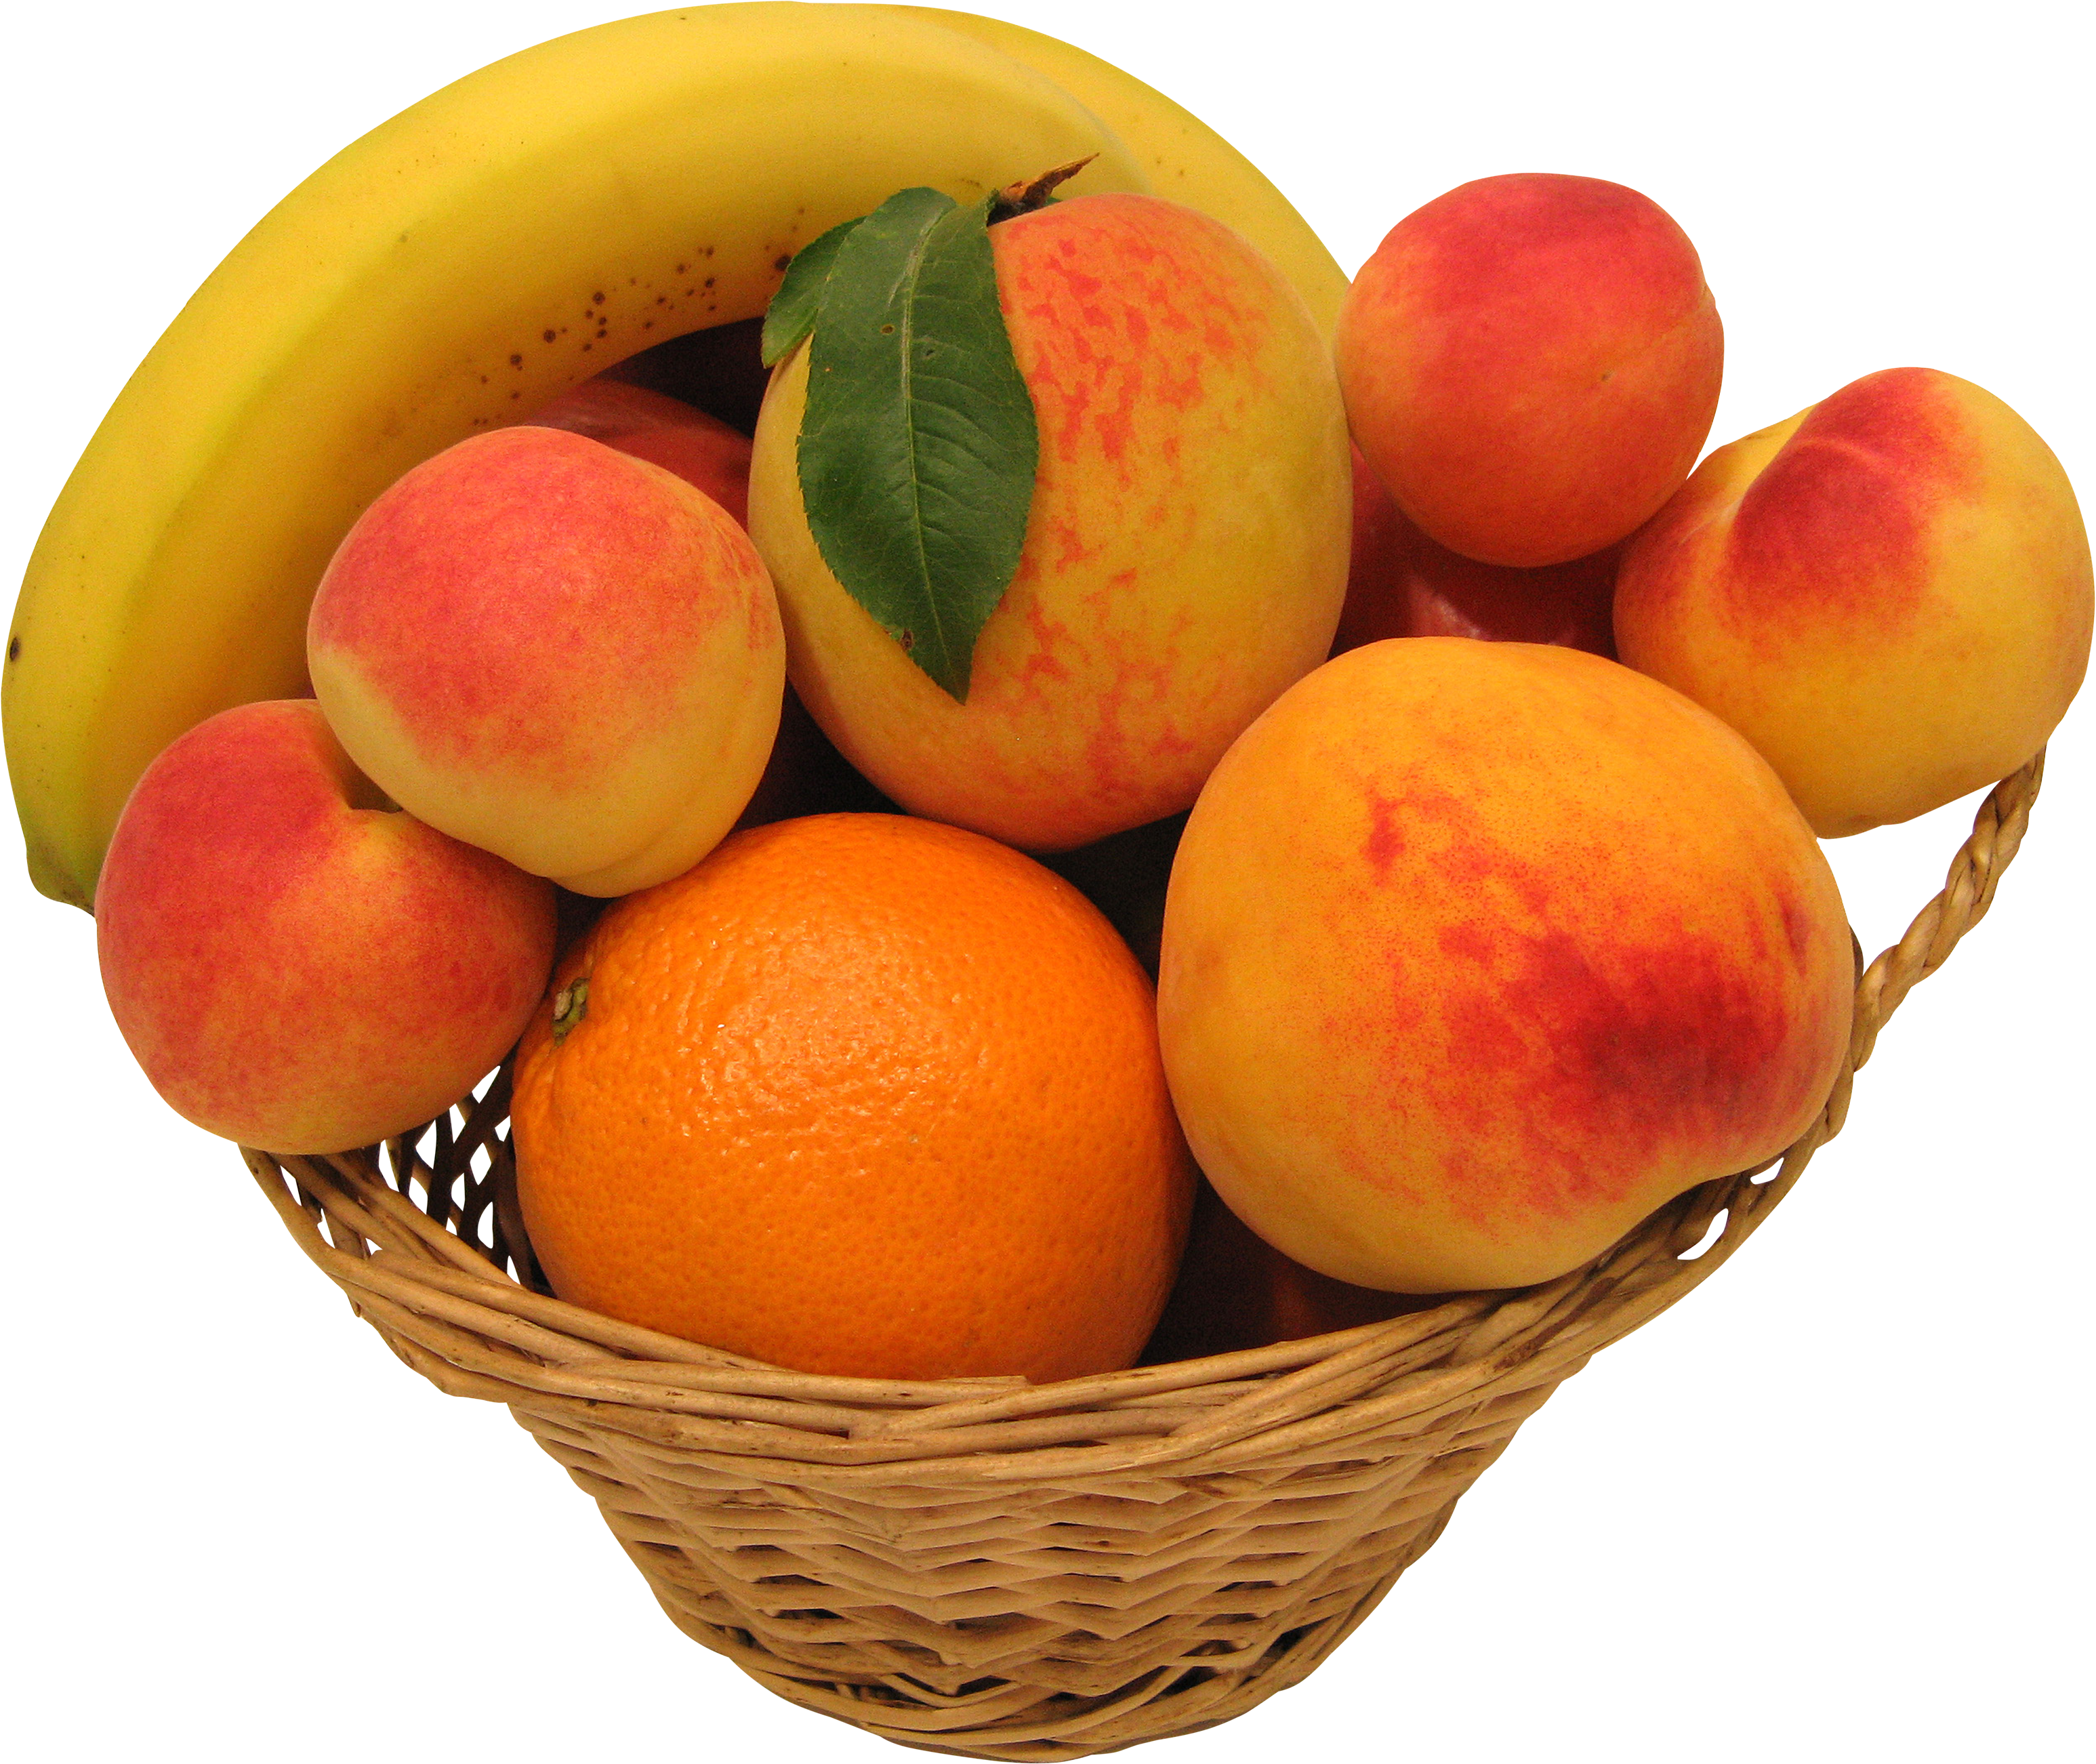 Peaches Oranges and Bananas